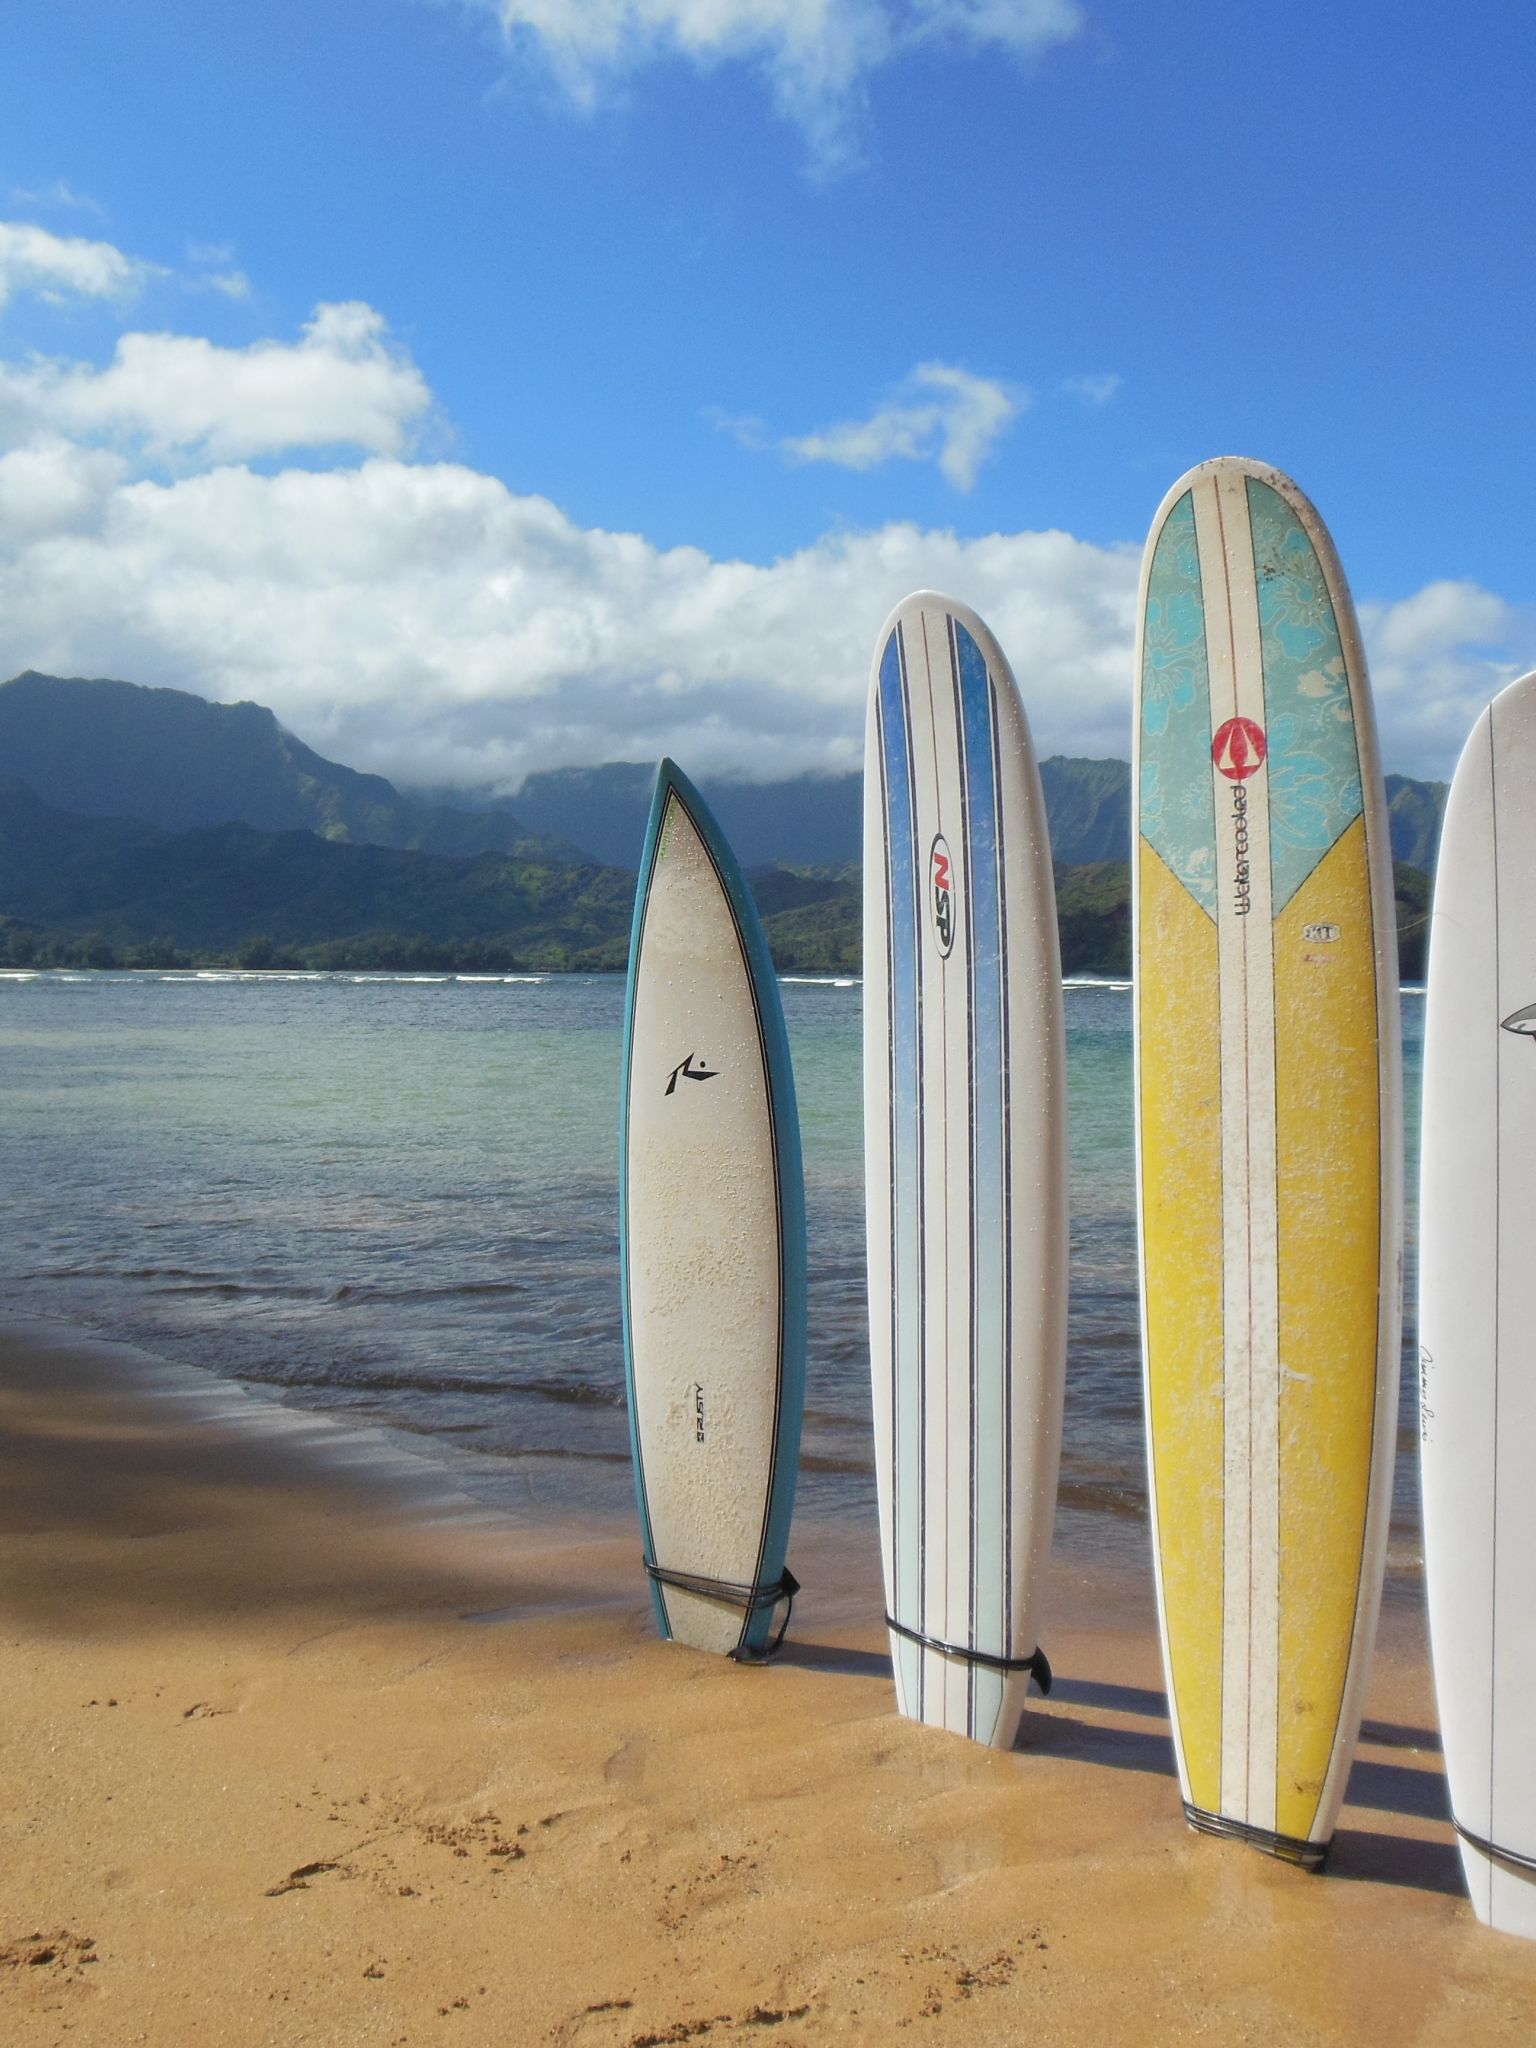 Free download Surfboards [4608x3456] OC wallpaper [4608x3456] for your Desktop, Mobile & Tablet. Explore Surfboards Wallpaper